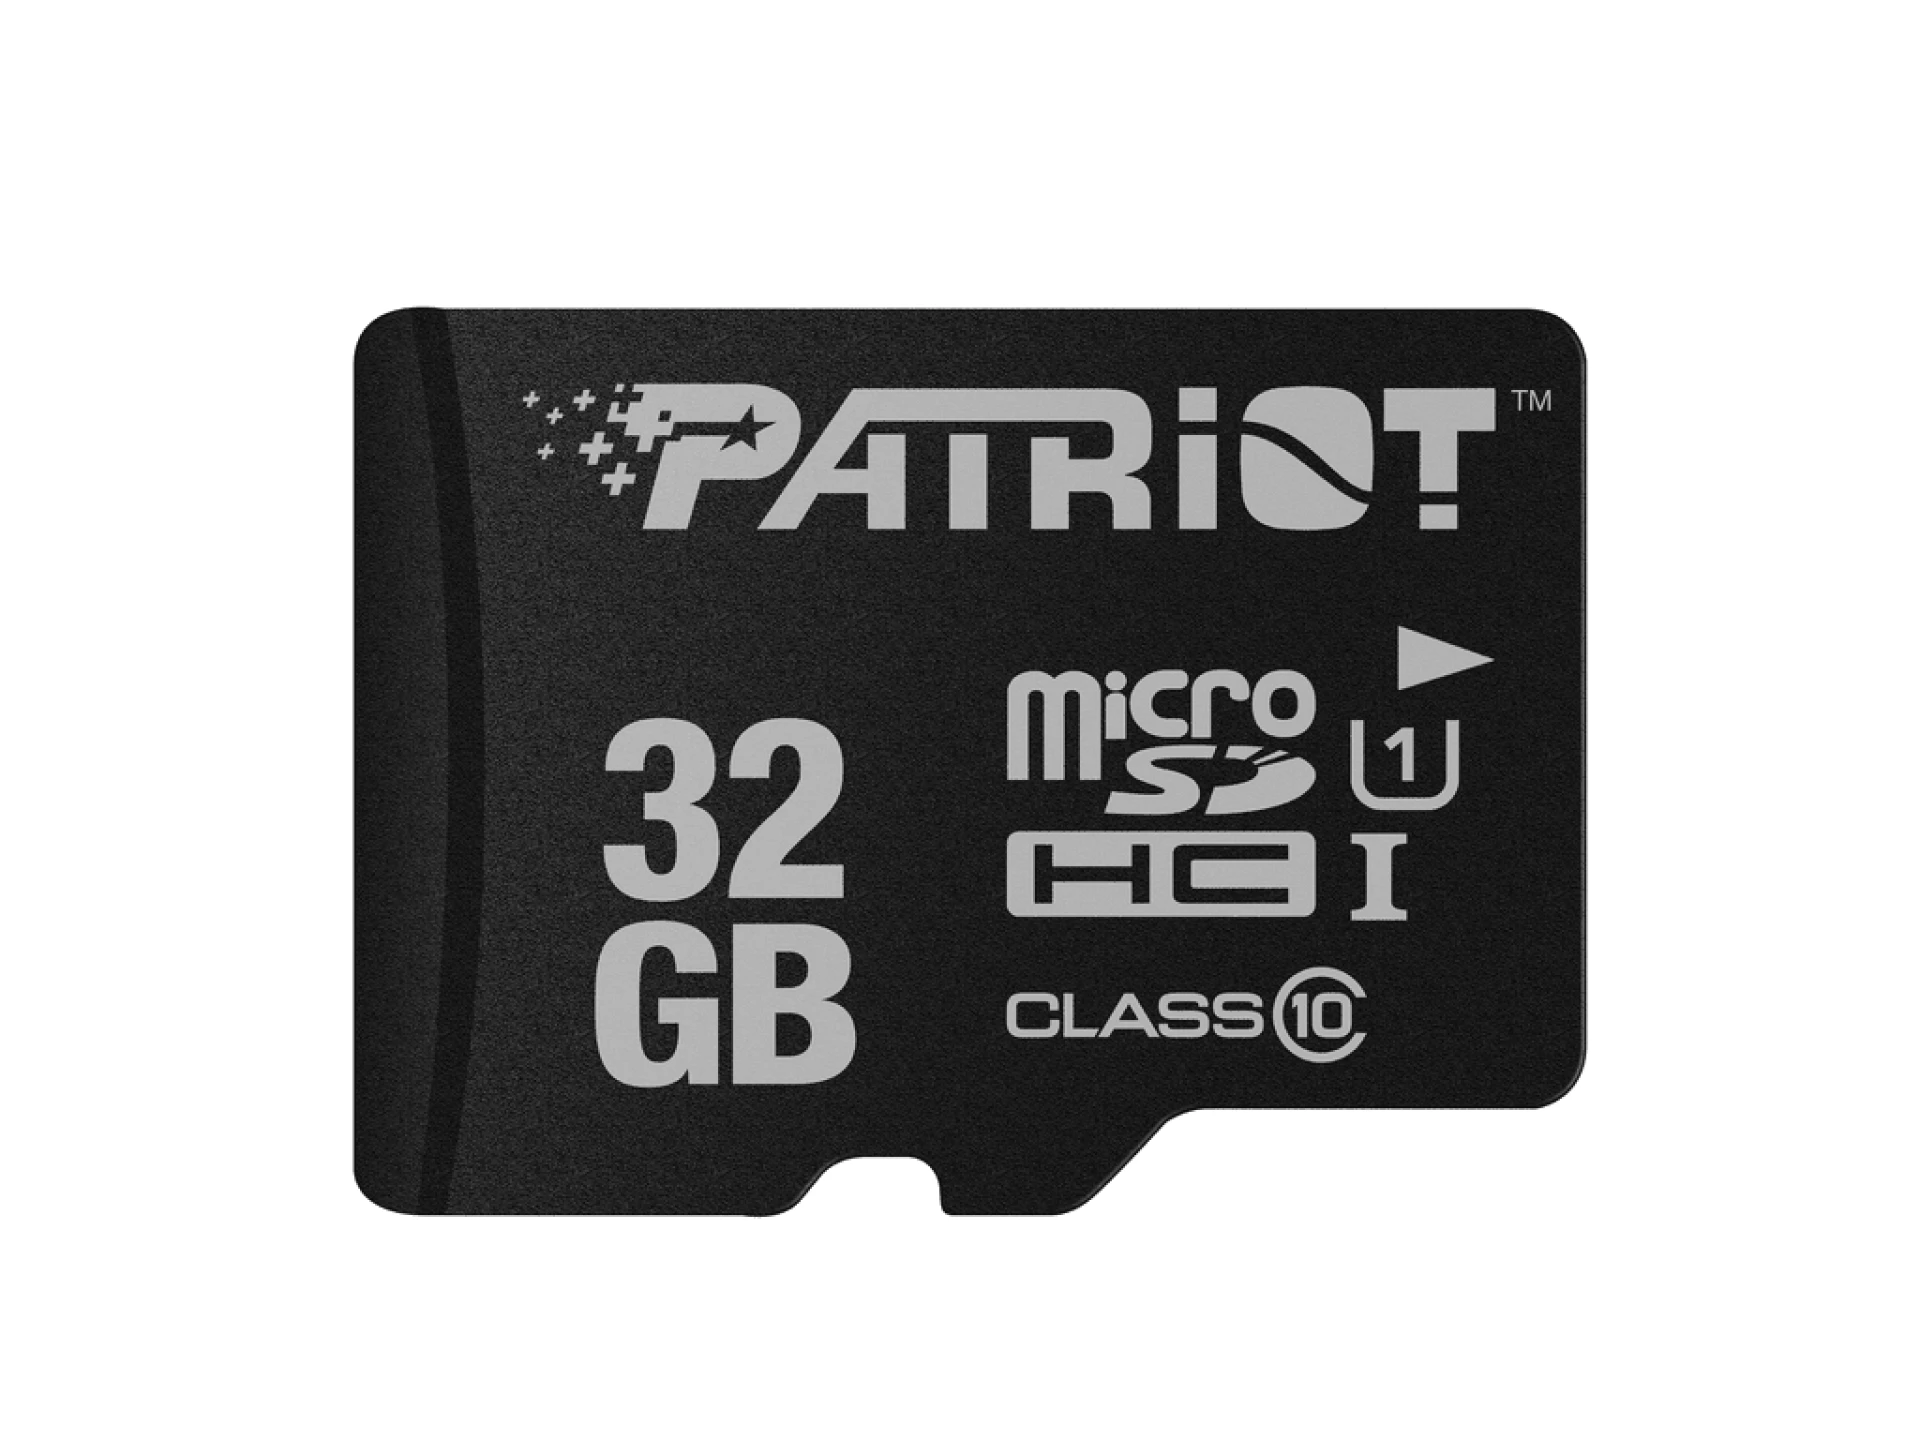 Patriot microSD 32GB;